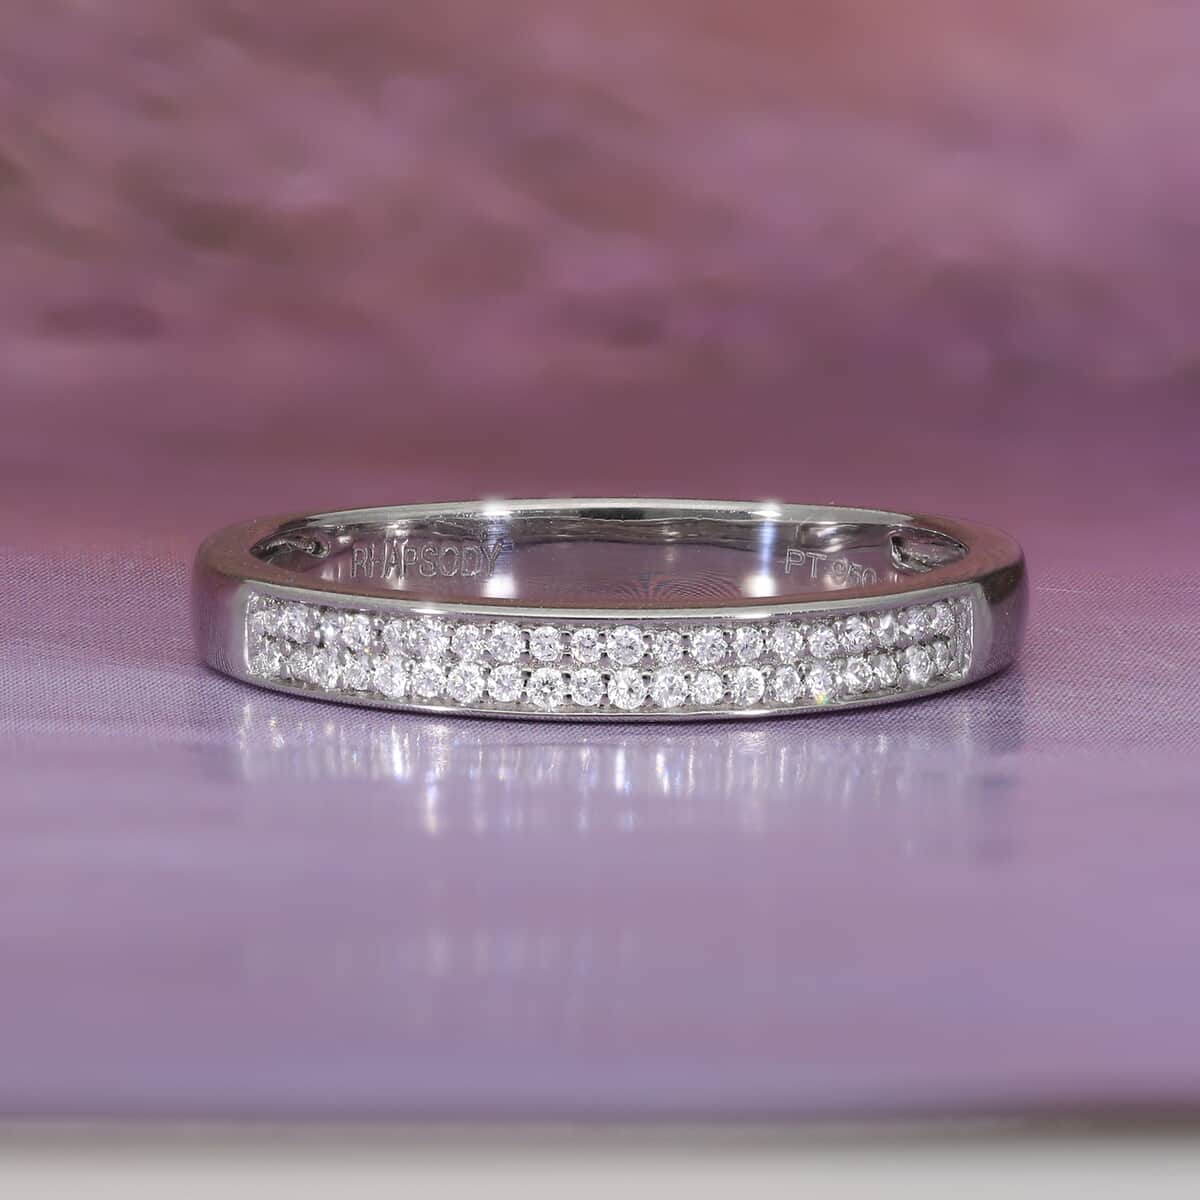 RHAPSODY IGI Certified 950 Platinum E-F VS Diamond Ring (Size 6.0) 5 Grams 0.18 ctw image number 1